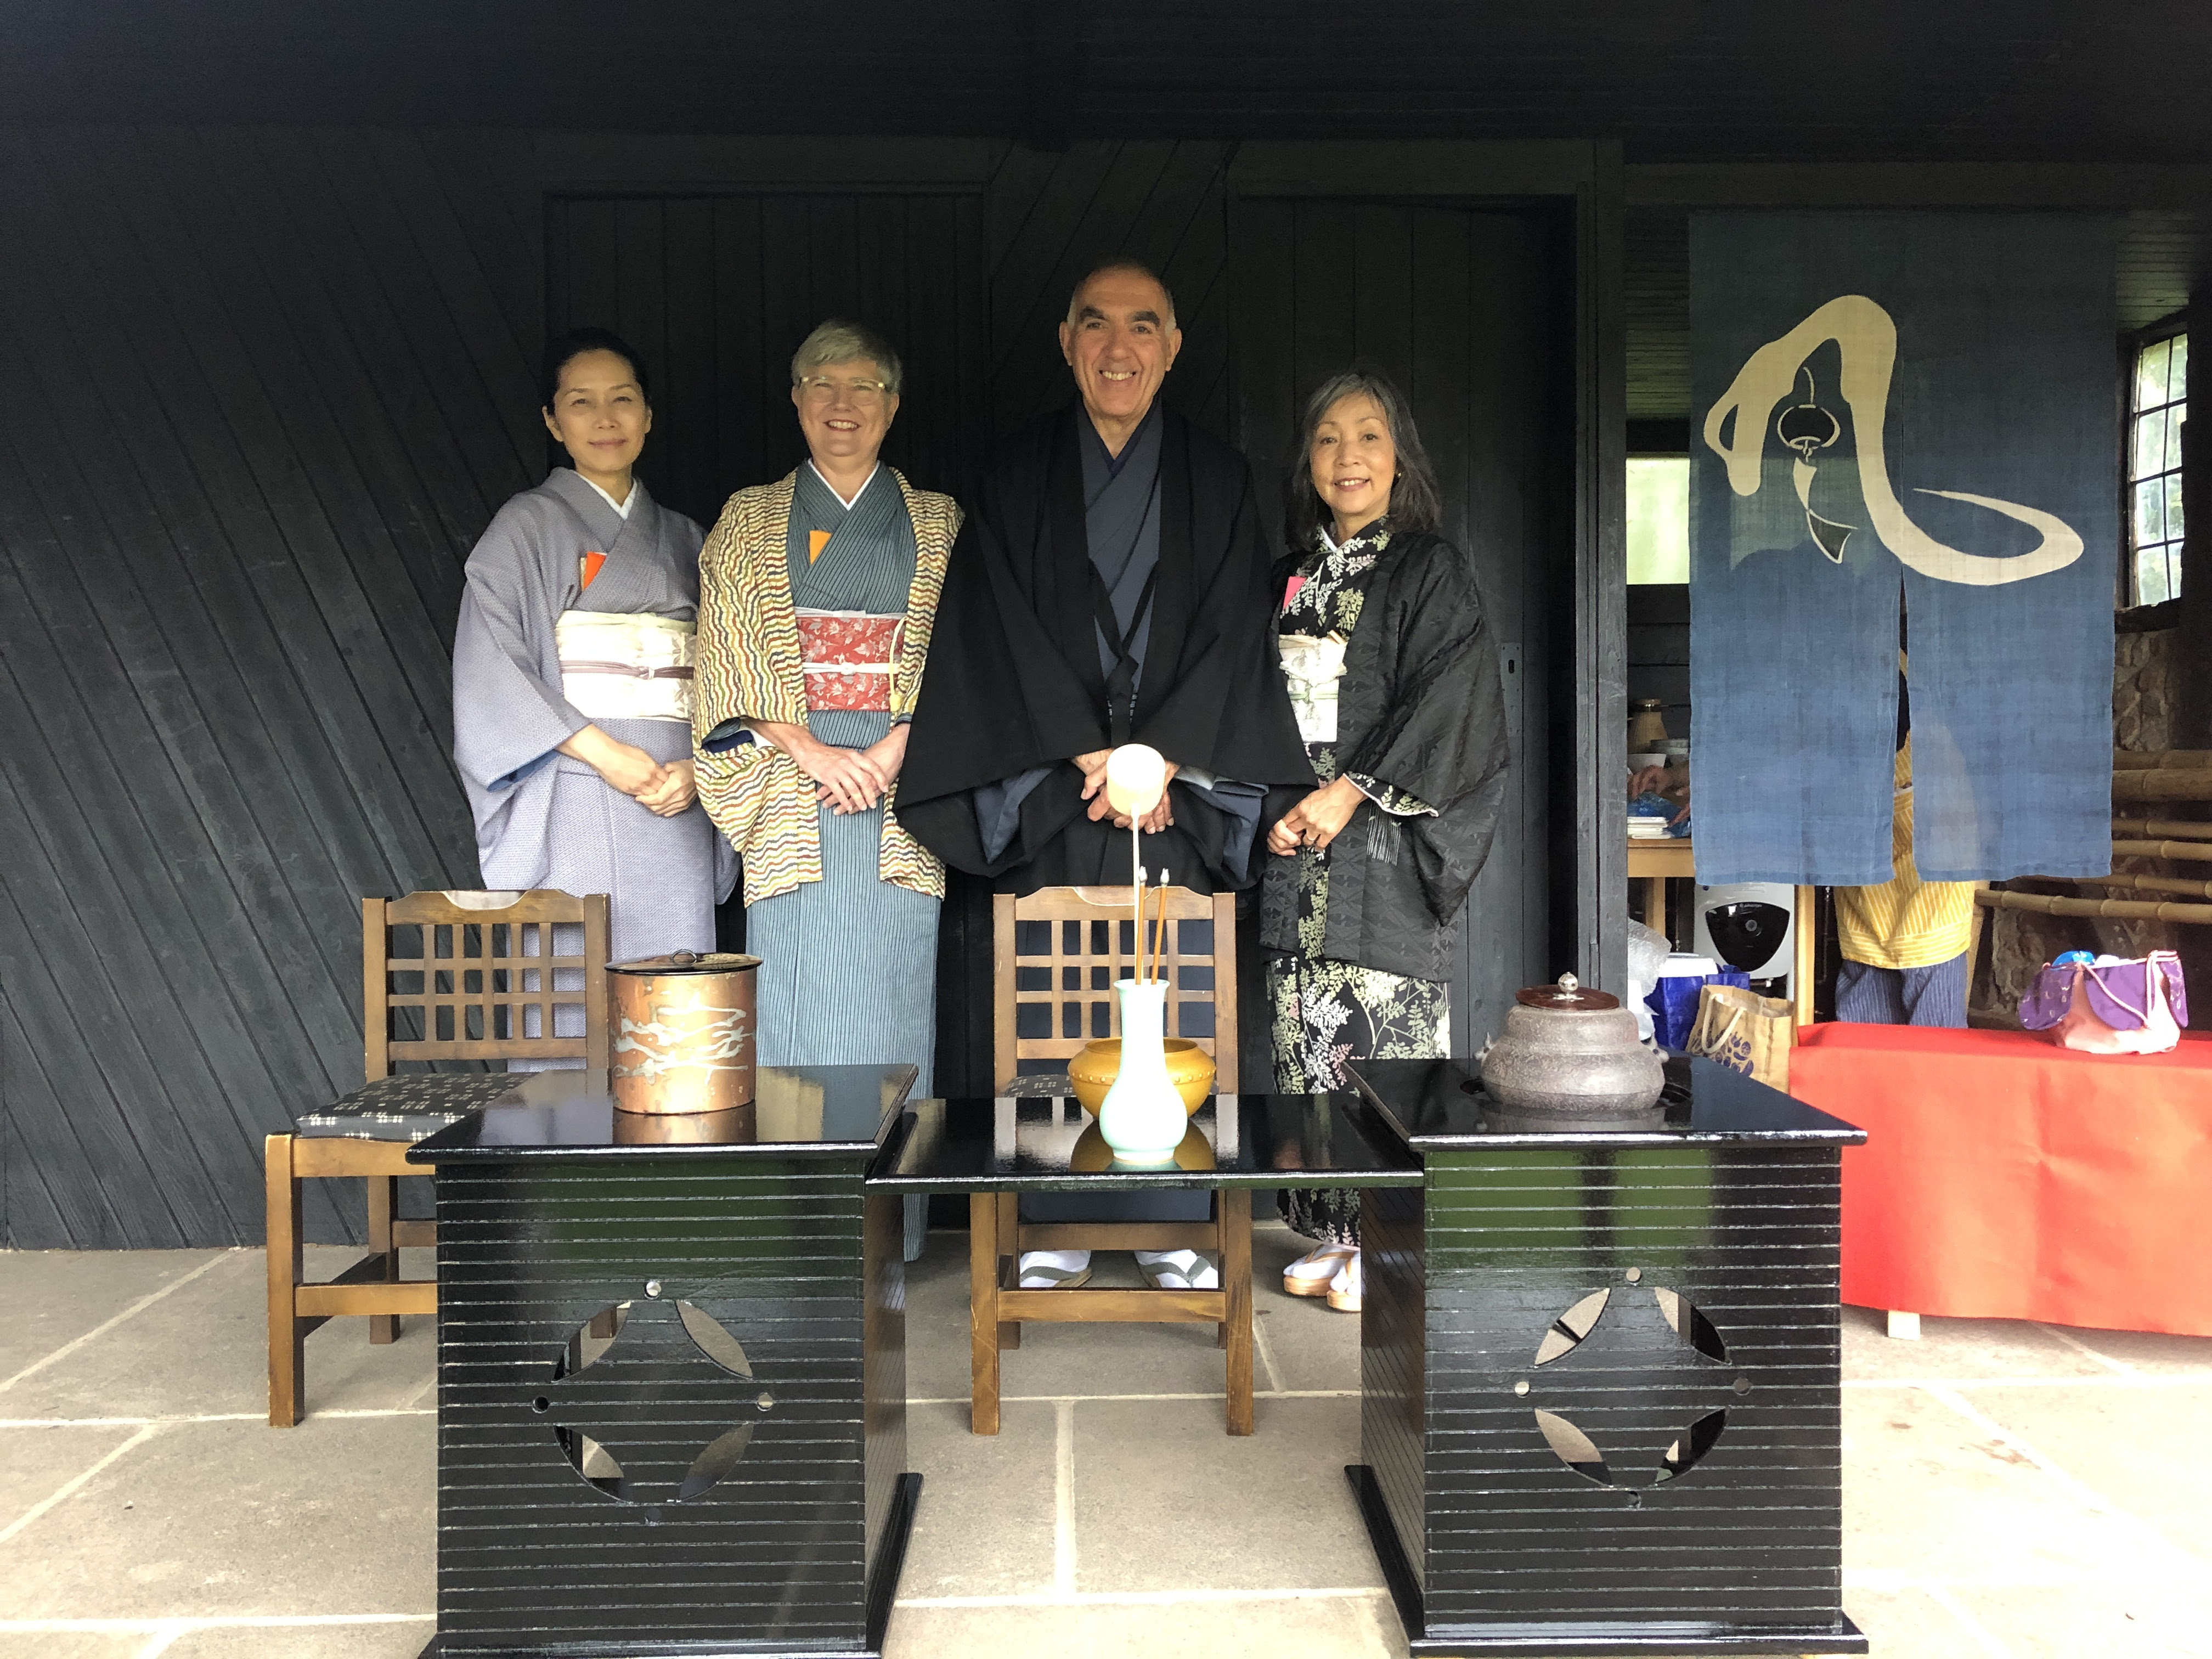 Peter-sensei Will Serve Tea in the Japanese Garden